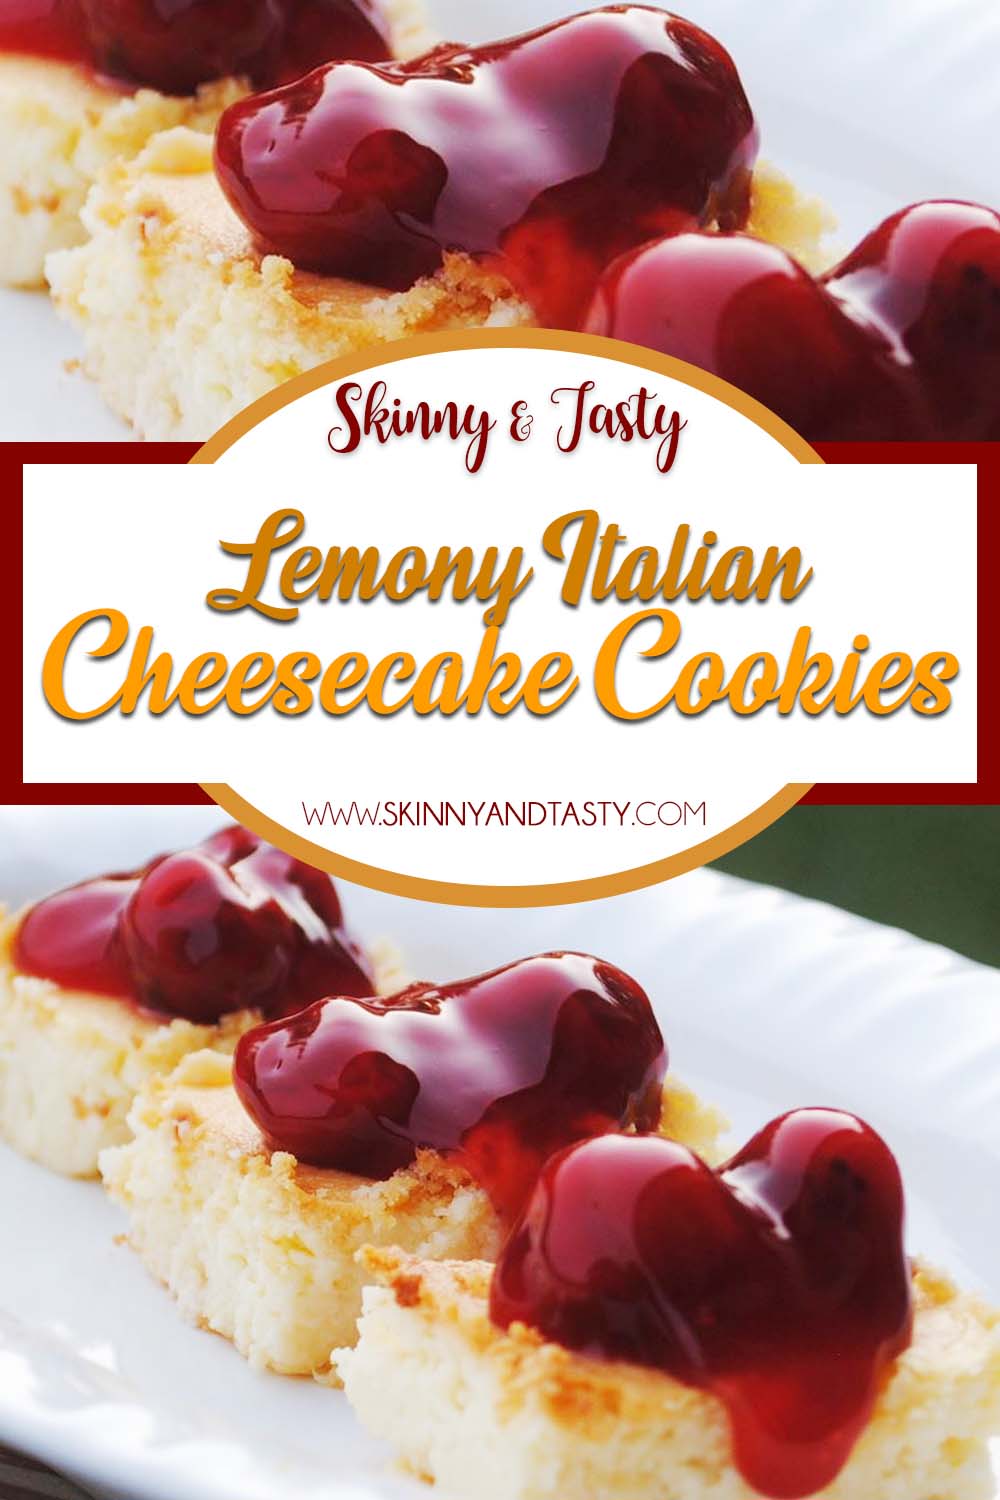 Lemony Italian Cheesecake Cookies